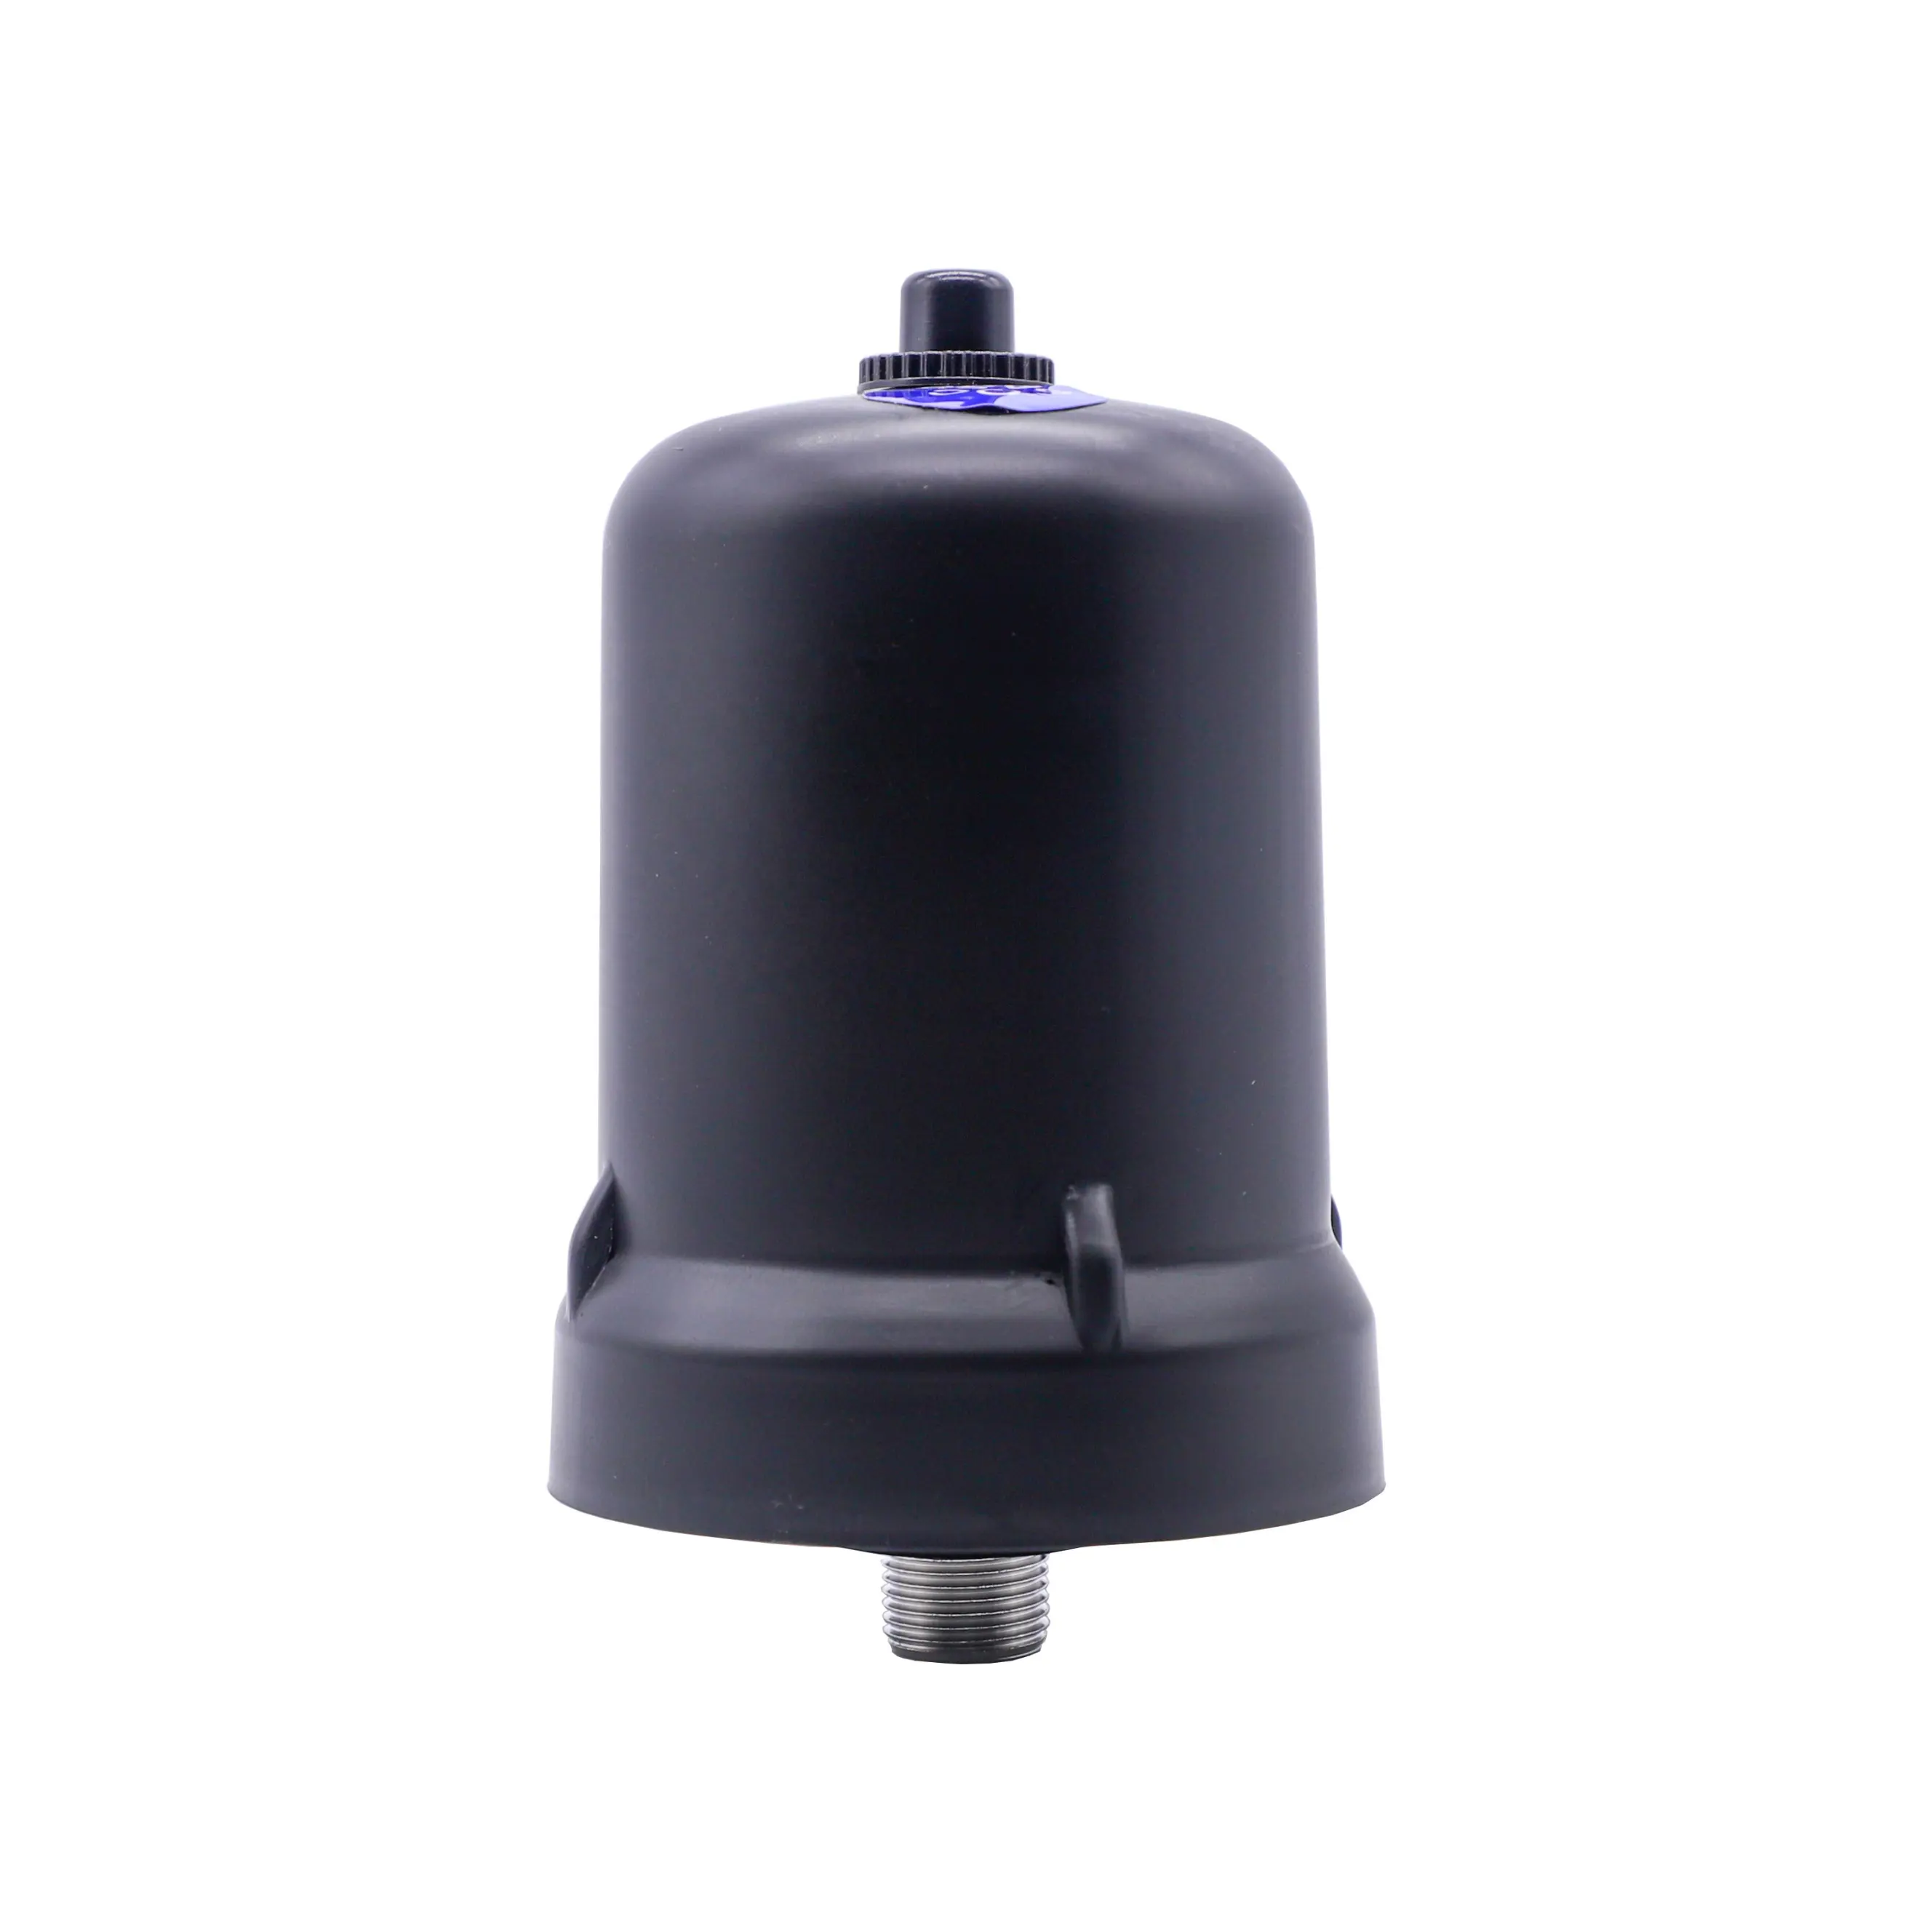 0.5L water tank  Pressure diaphragm tank for water pump  balance pressure